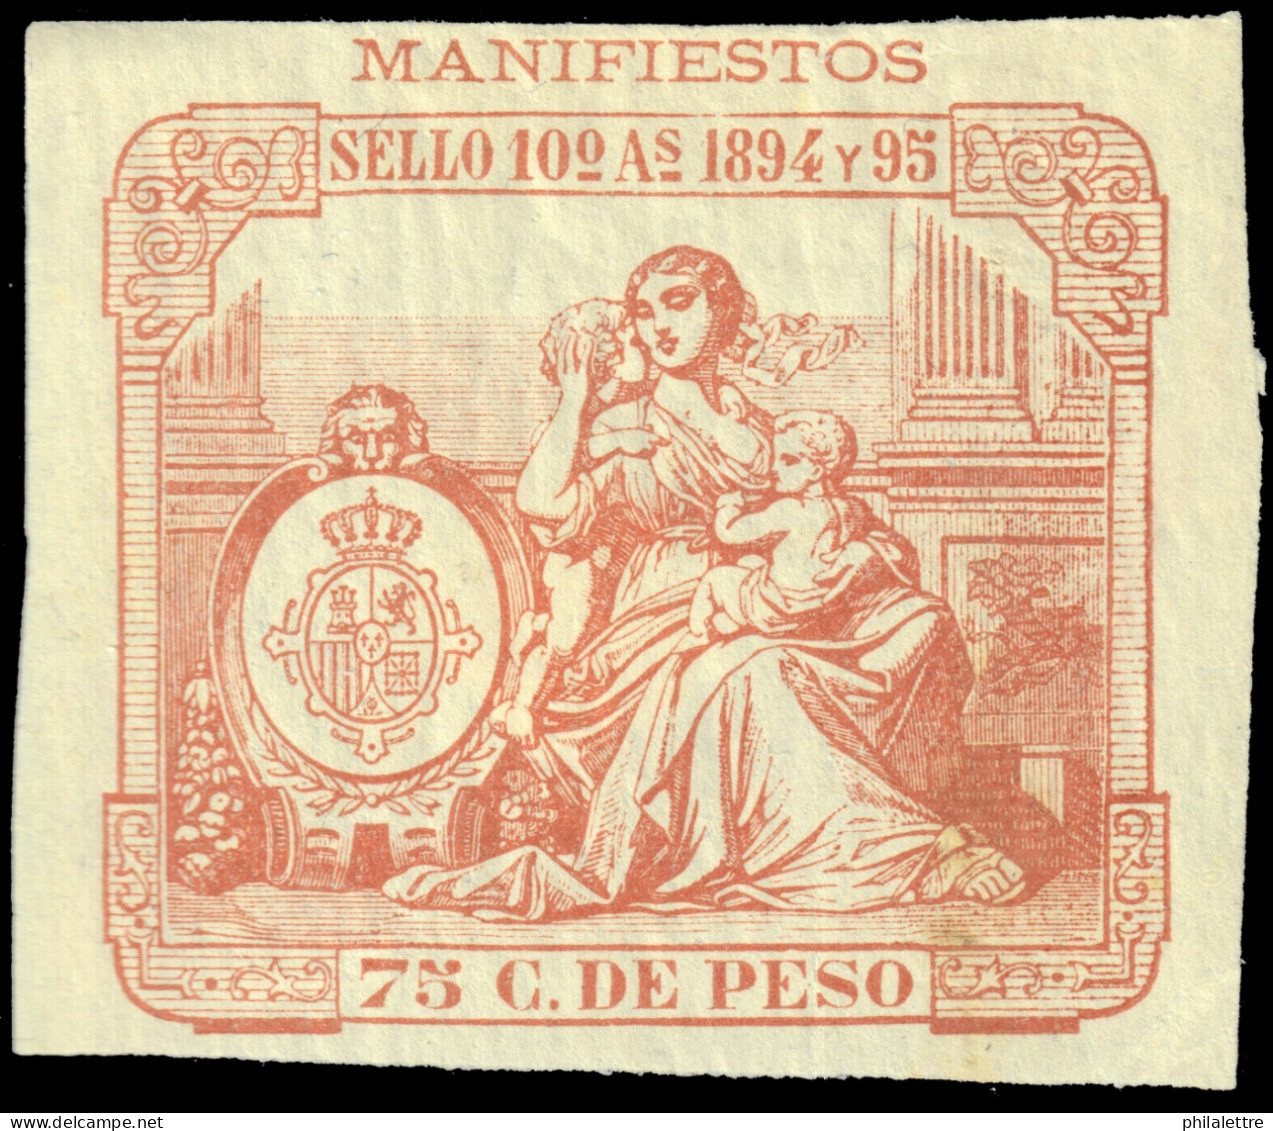 ESPAGNE / ESPANA - COLONIAS (Cuba) 1894 "MANIFIESTOS" Fulcher 1027 75c Naranja - Nuevo* - Cuba (1874-1898)